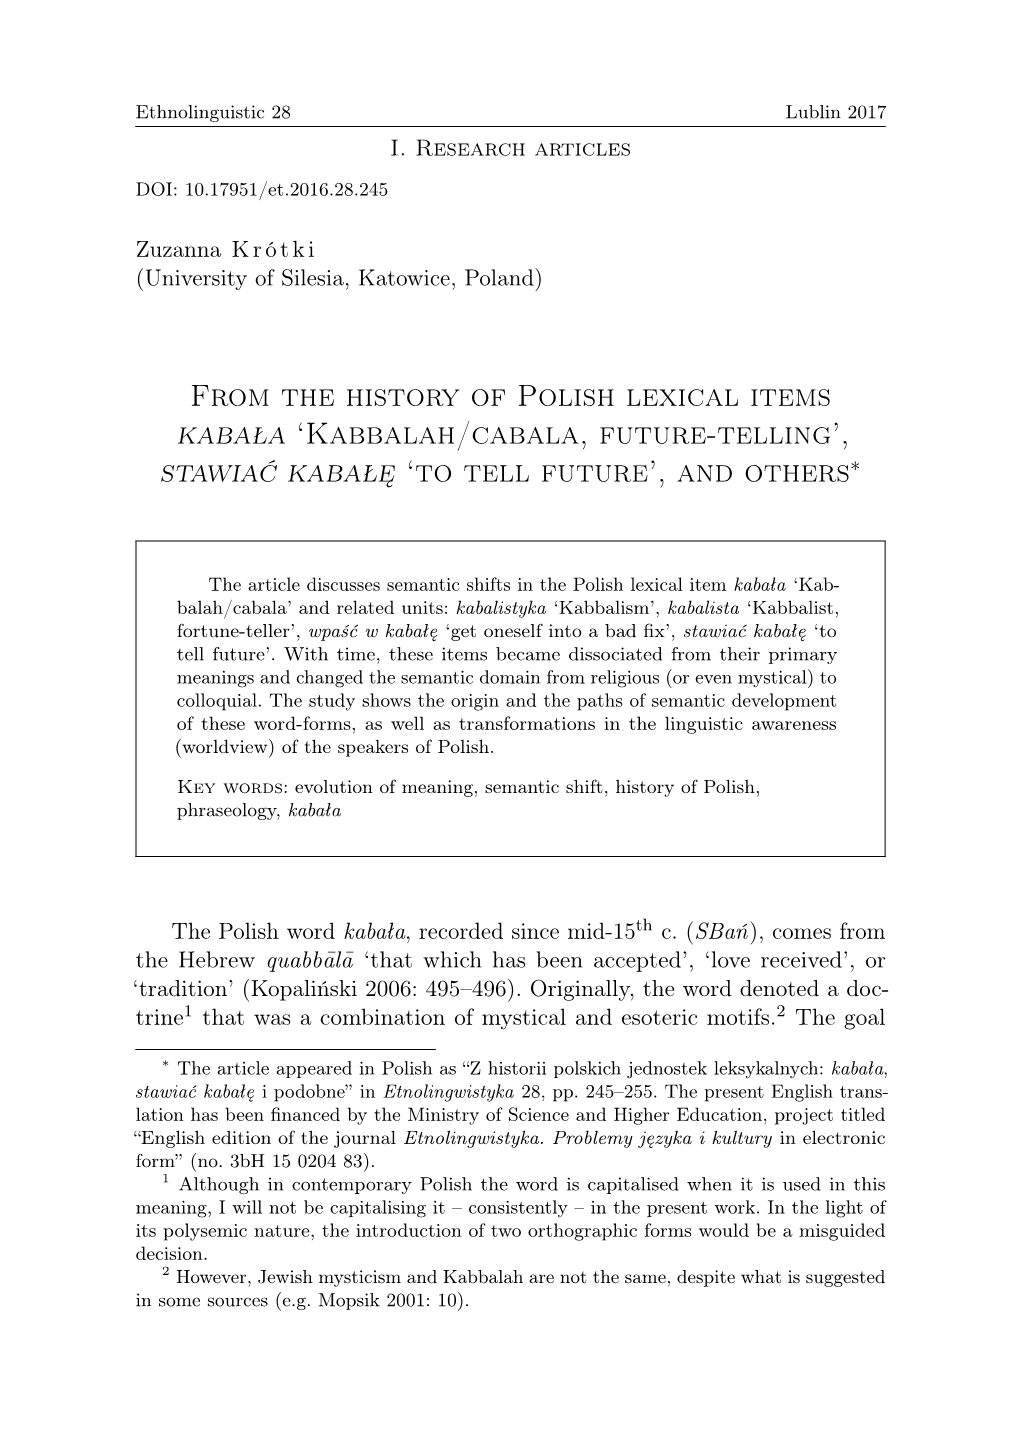 From the History of Polish Lexical Items Kabała 'Kabbalah/Cabala, Future-Telling'